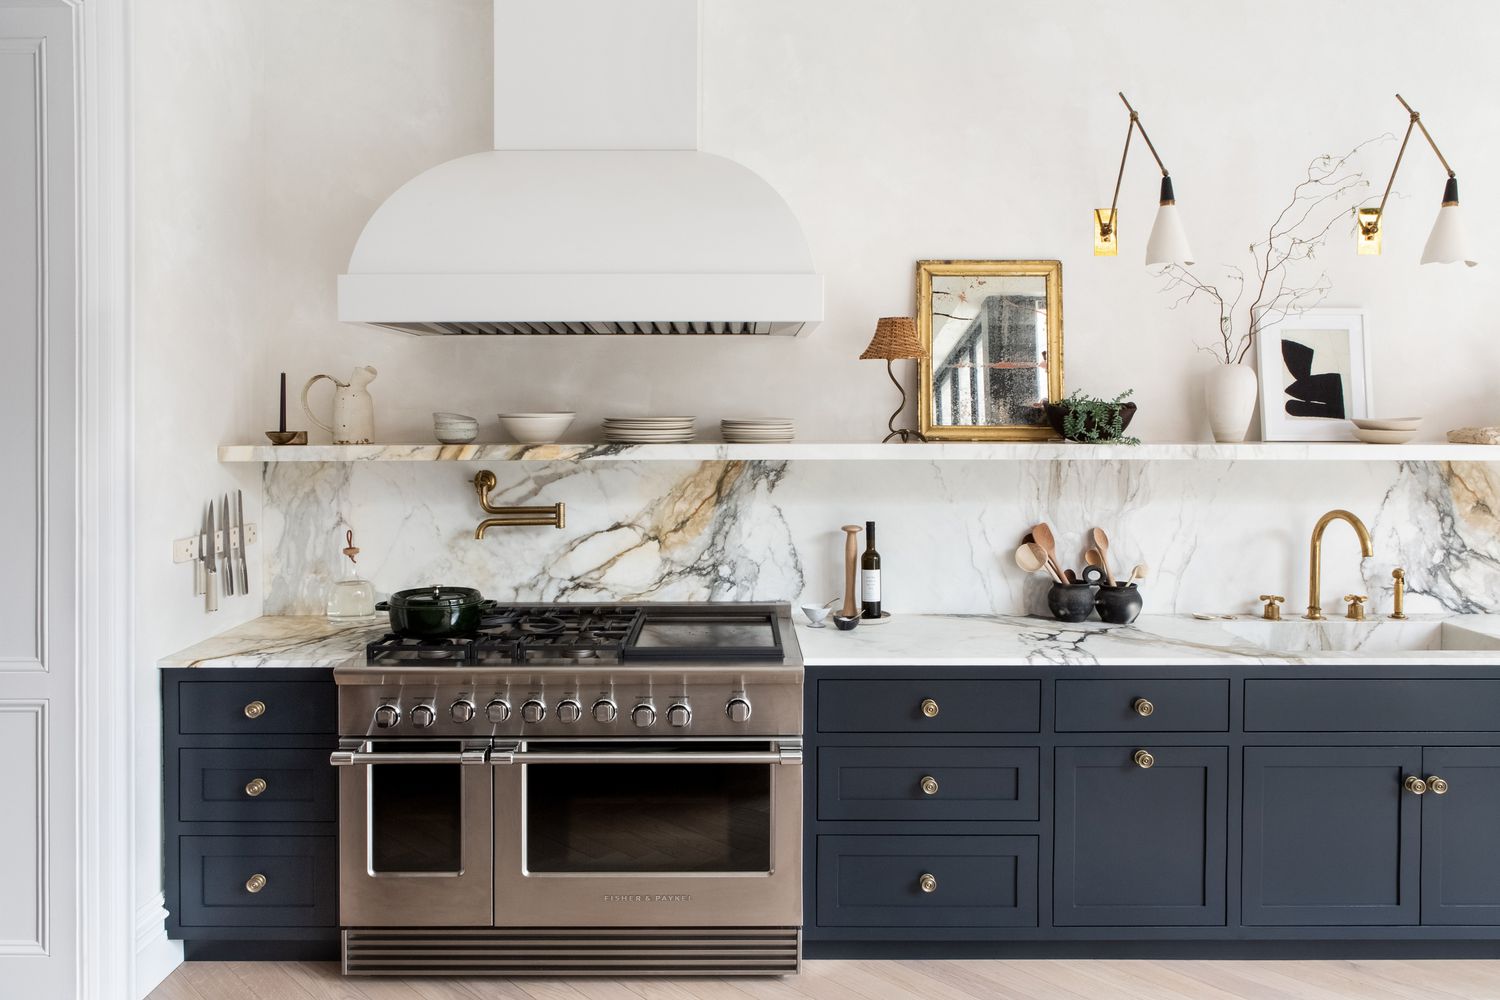 Athena Calderone on Designing a Beautiful, Functional Kitchen ...